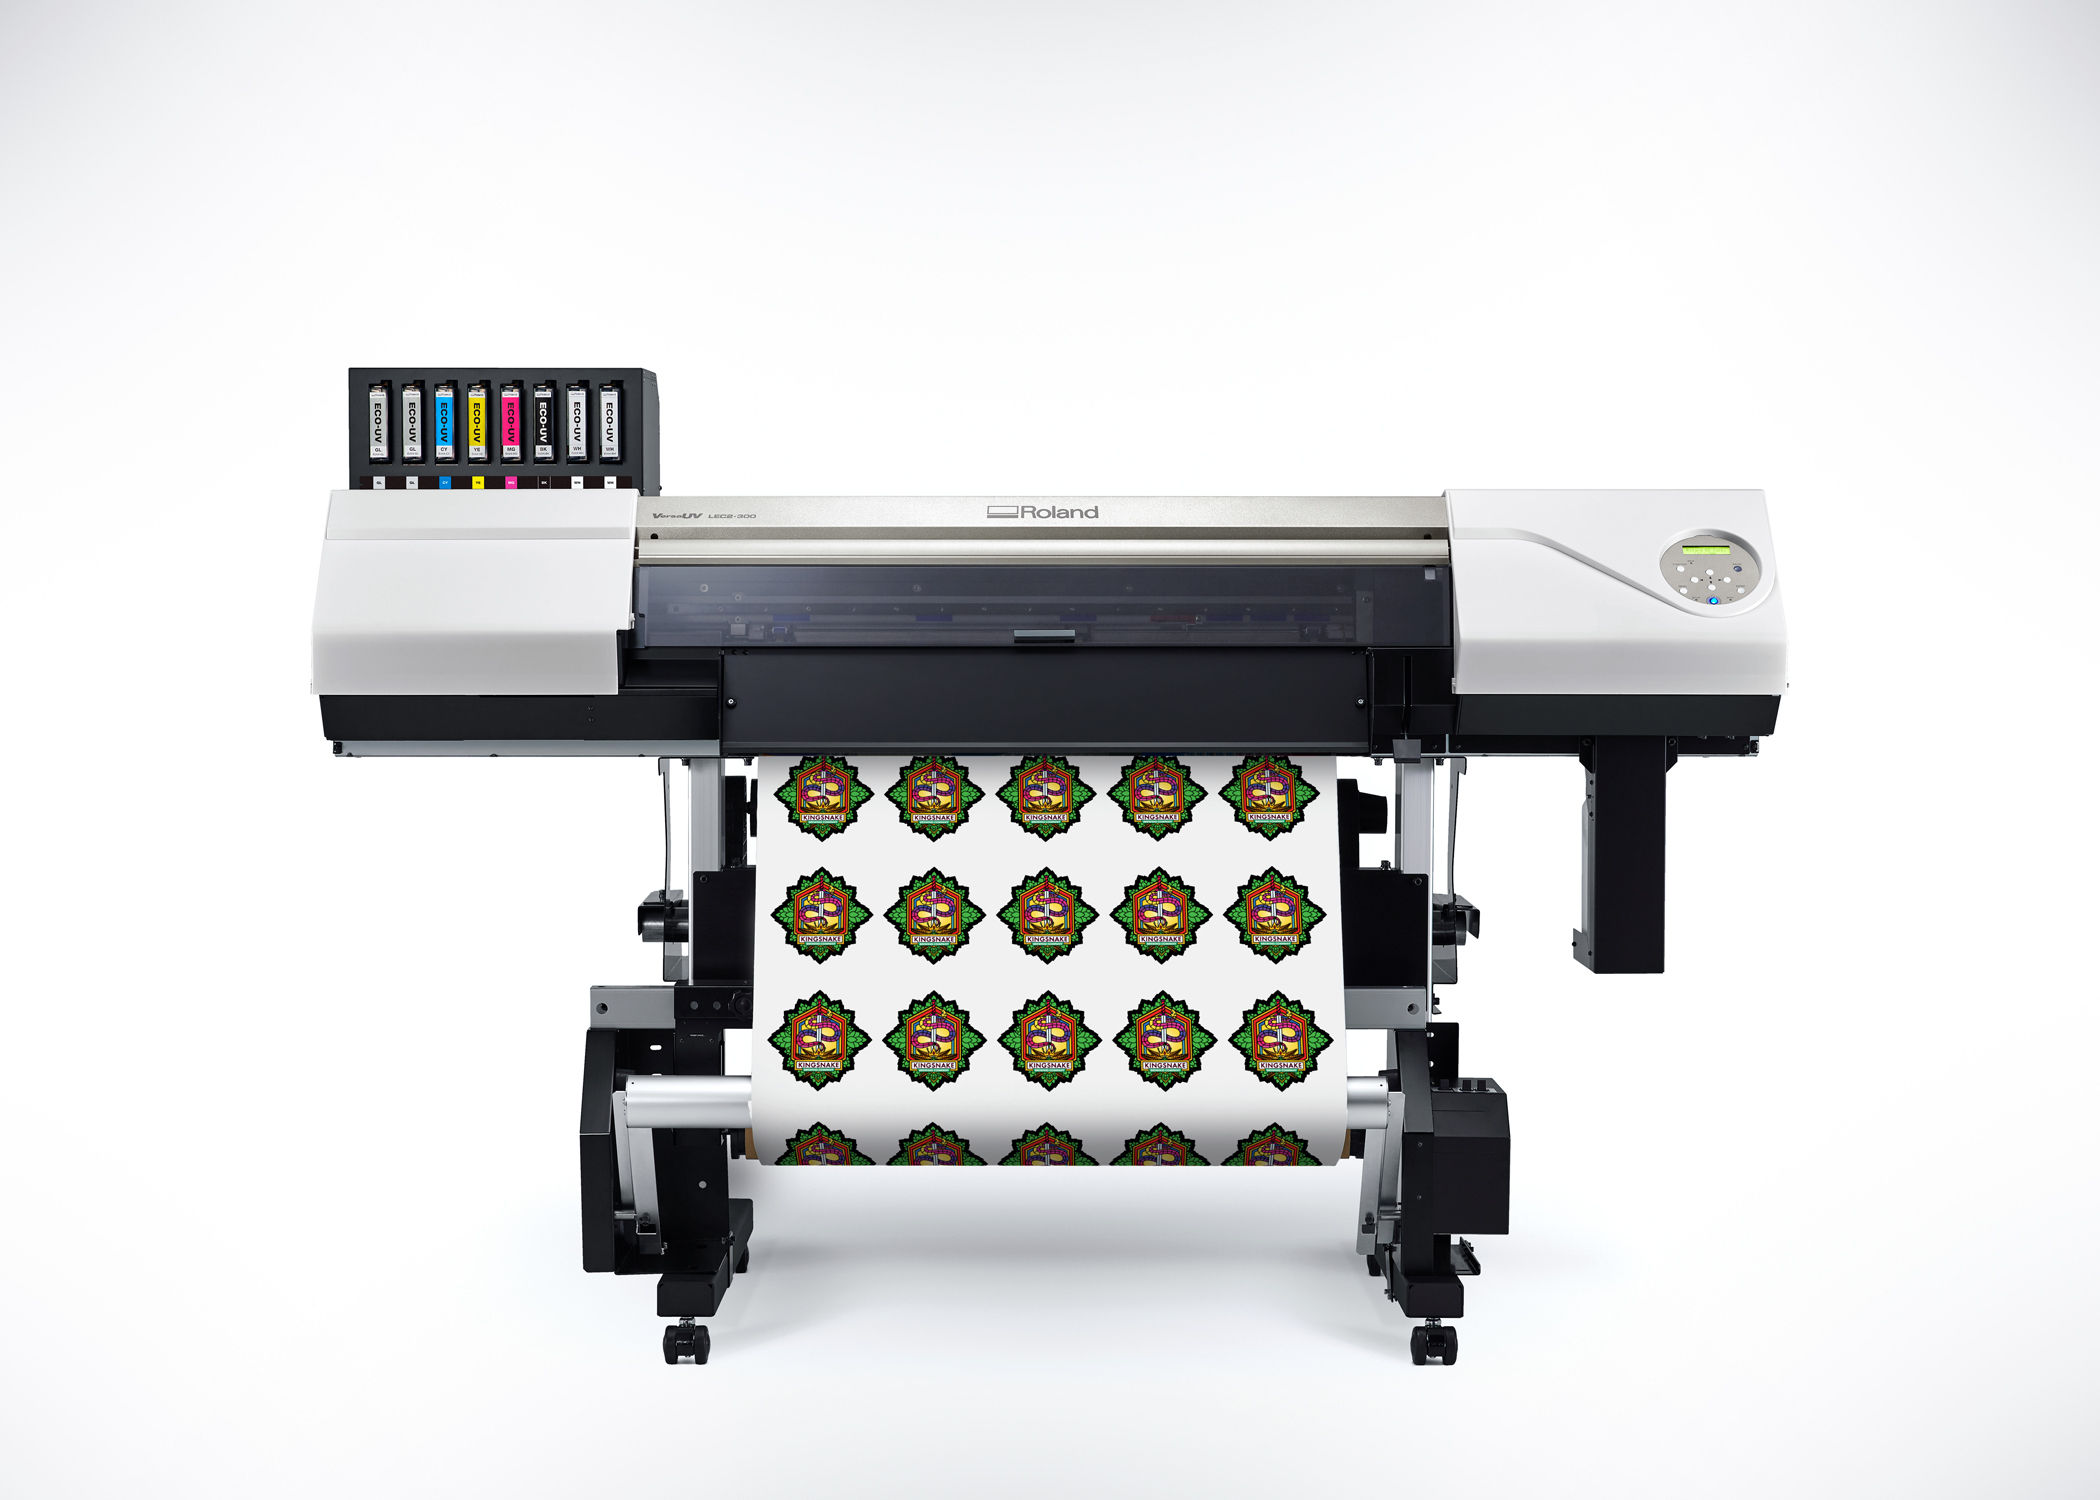 The new Roland VersaUV LEC2-300 UV printer/cutter